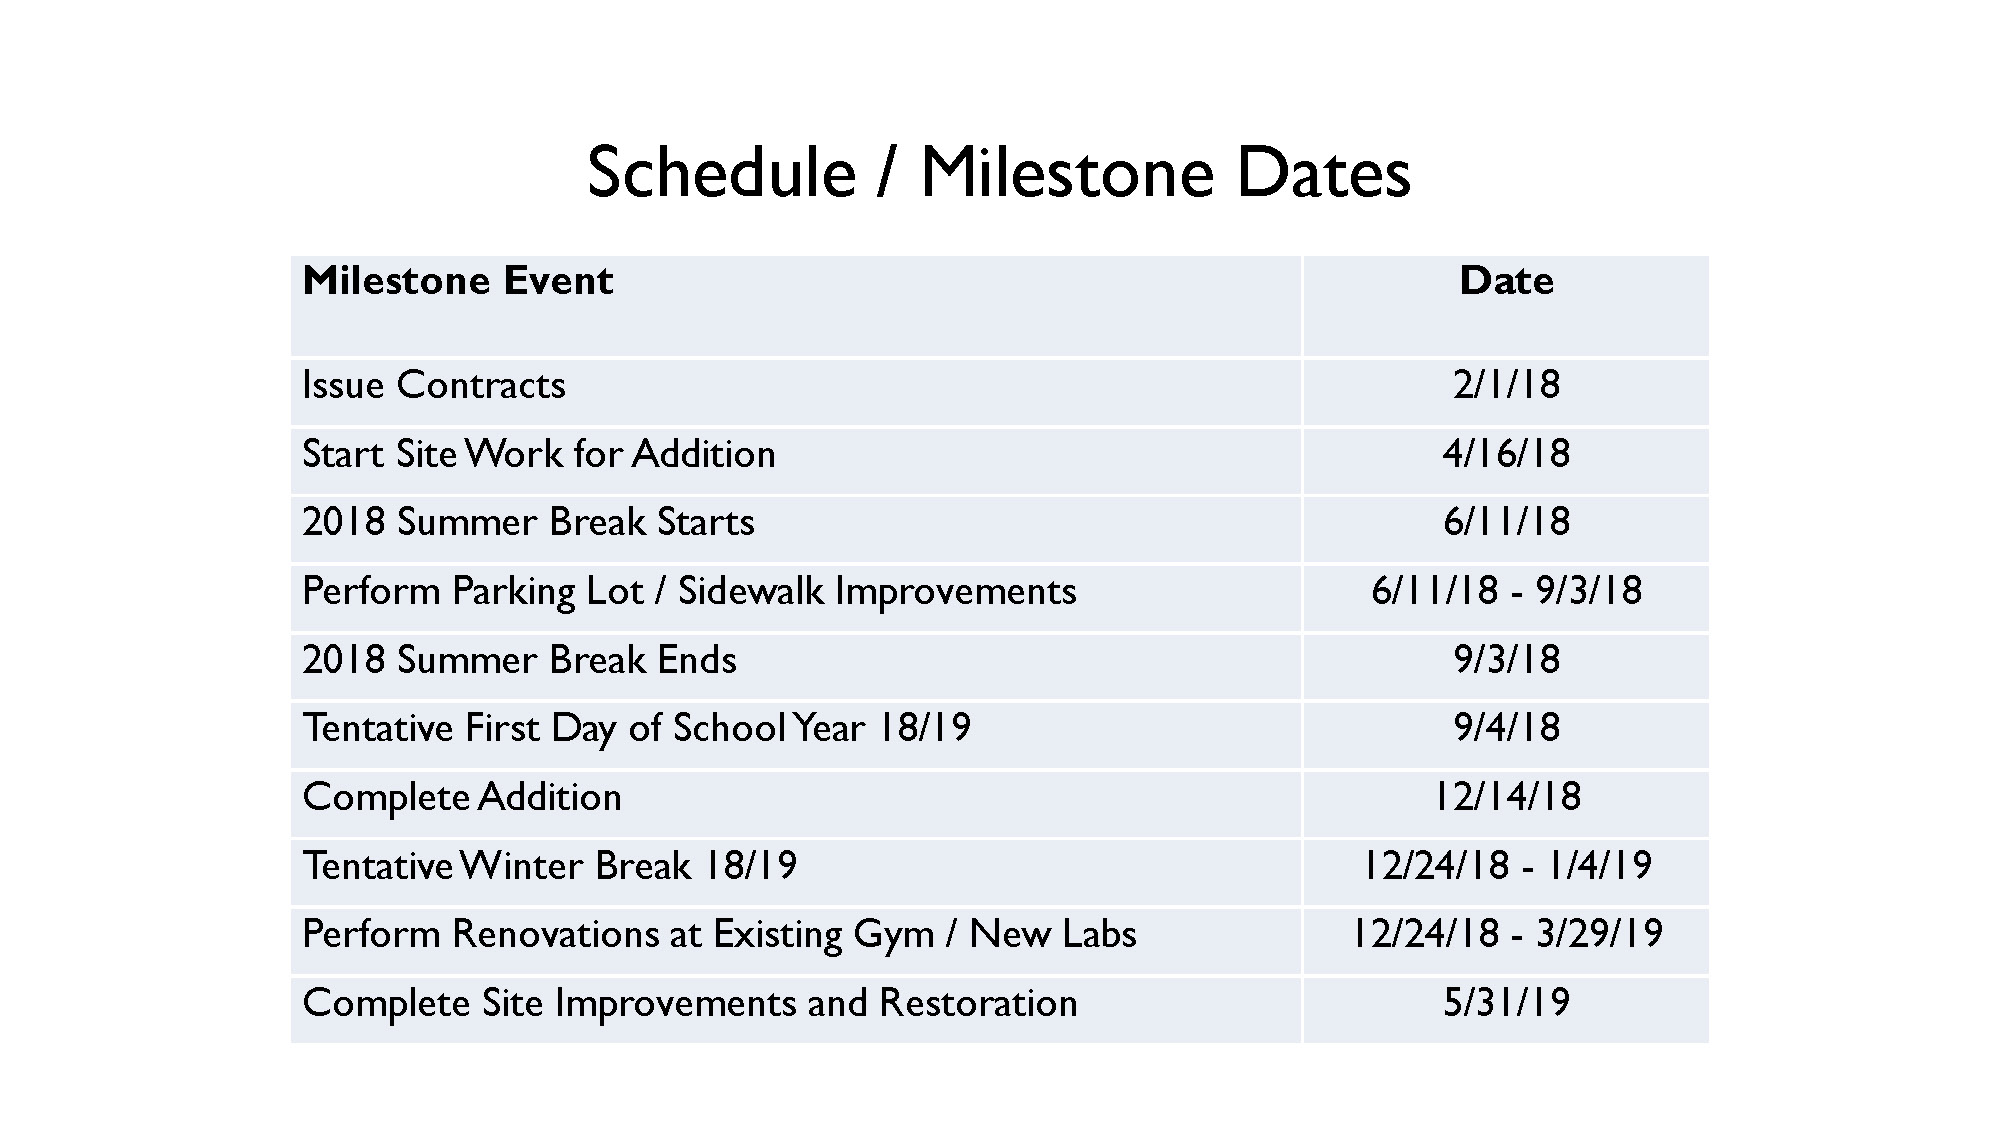 Schedule/Milestone Dates